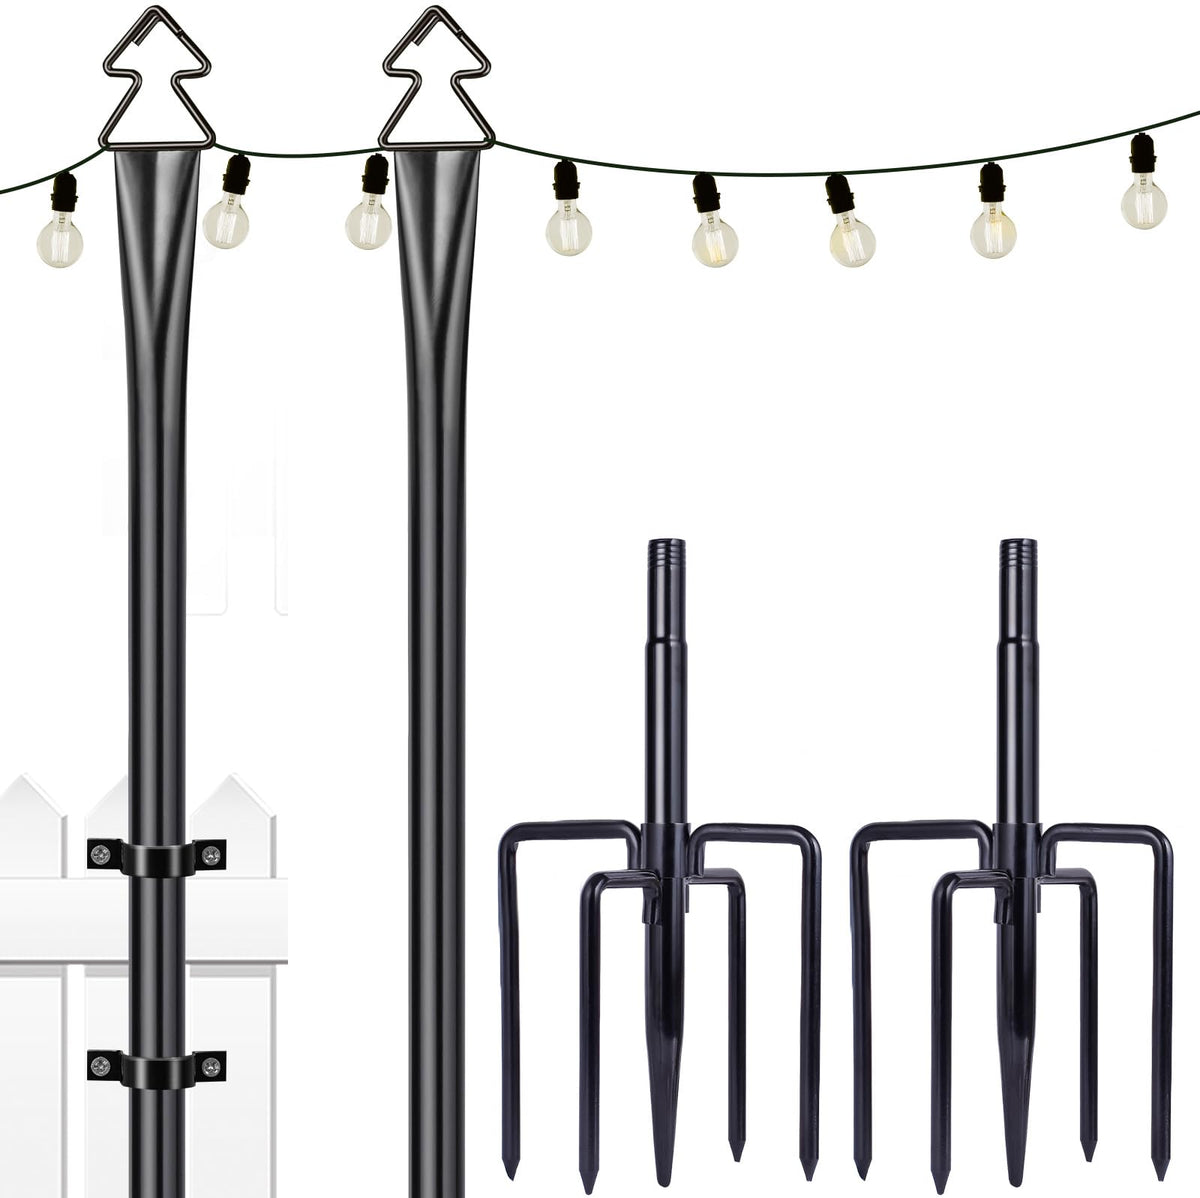 9.8 ft. String Light Pole in Black, 1-Pack